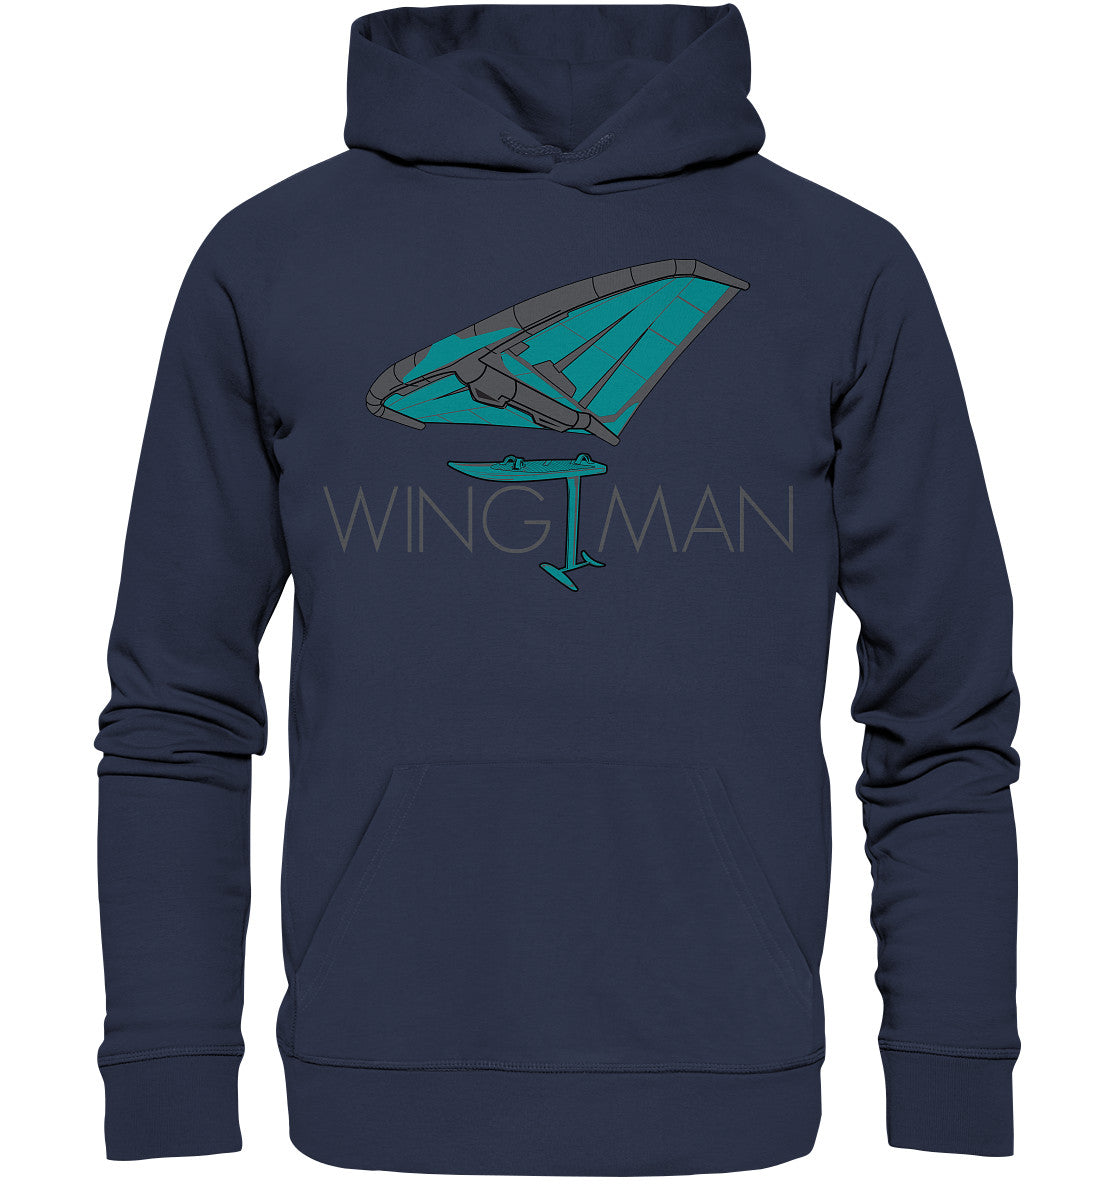 Wingfoiling-WINGMAN - Premium Unisex Hoodie